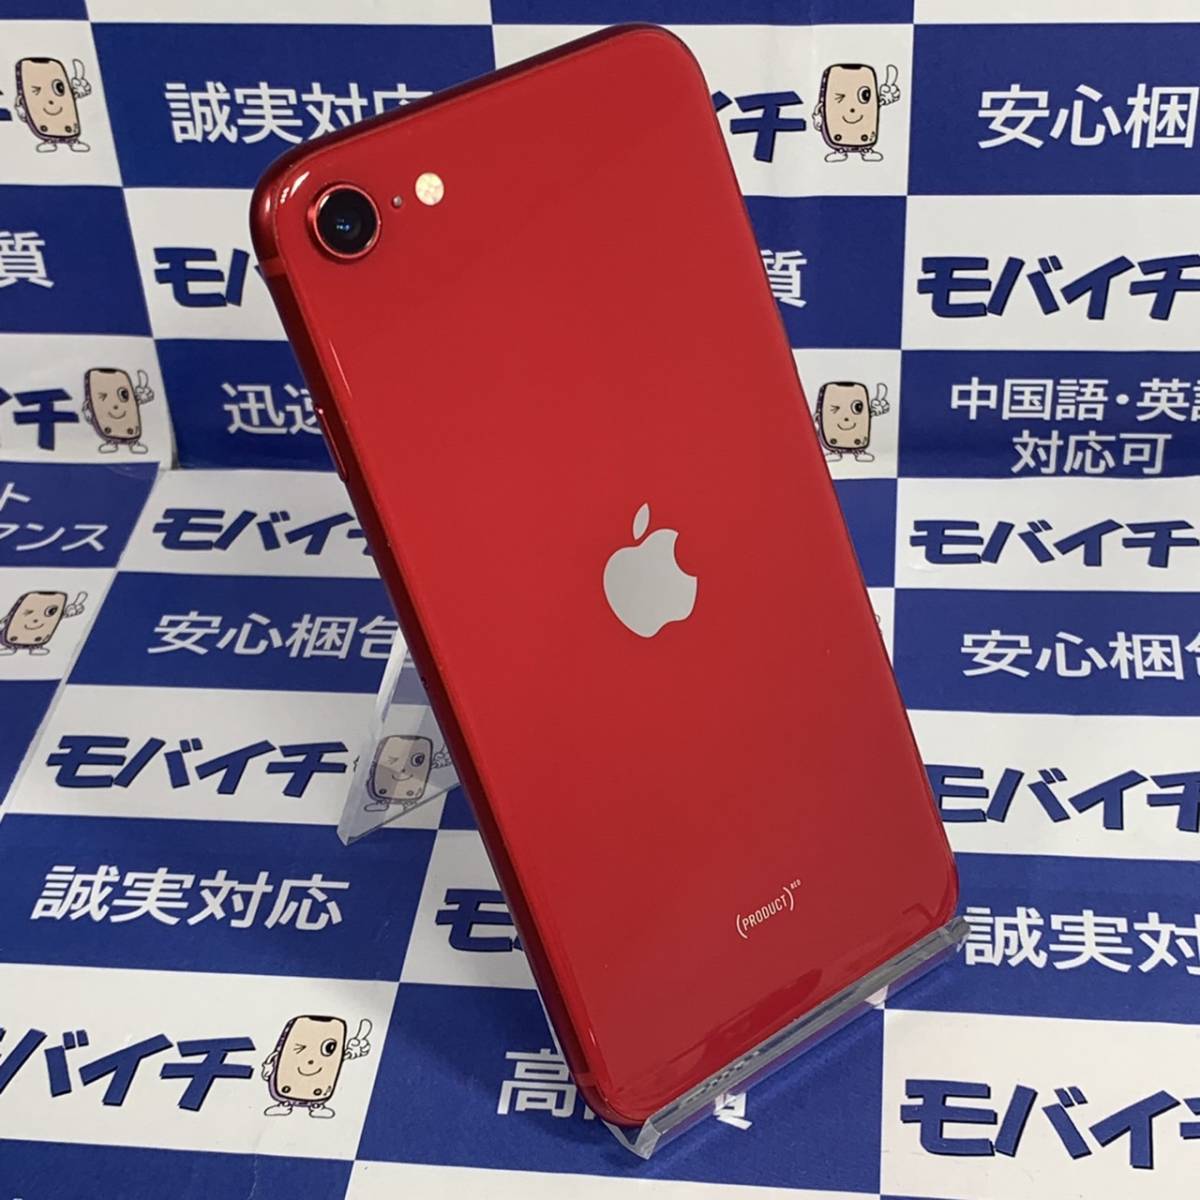 7403 iPhone SE 第2世代 128GB (PRODUCT)RED プロダクトレッド 赤 SIMフリー Apple Store版  MXD22J/A 綺麗な美品！！ www.hcc-bettercare.de